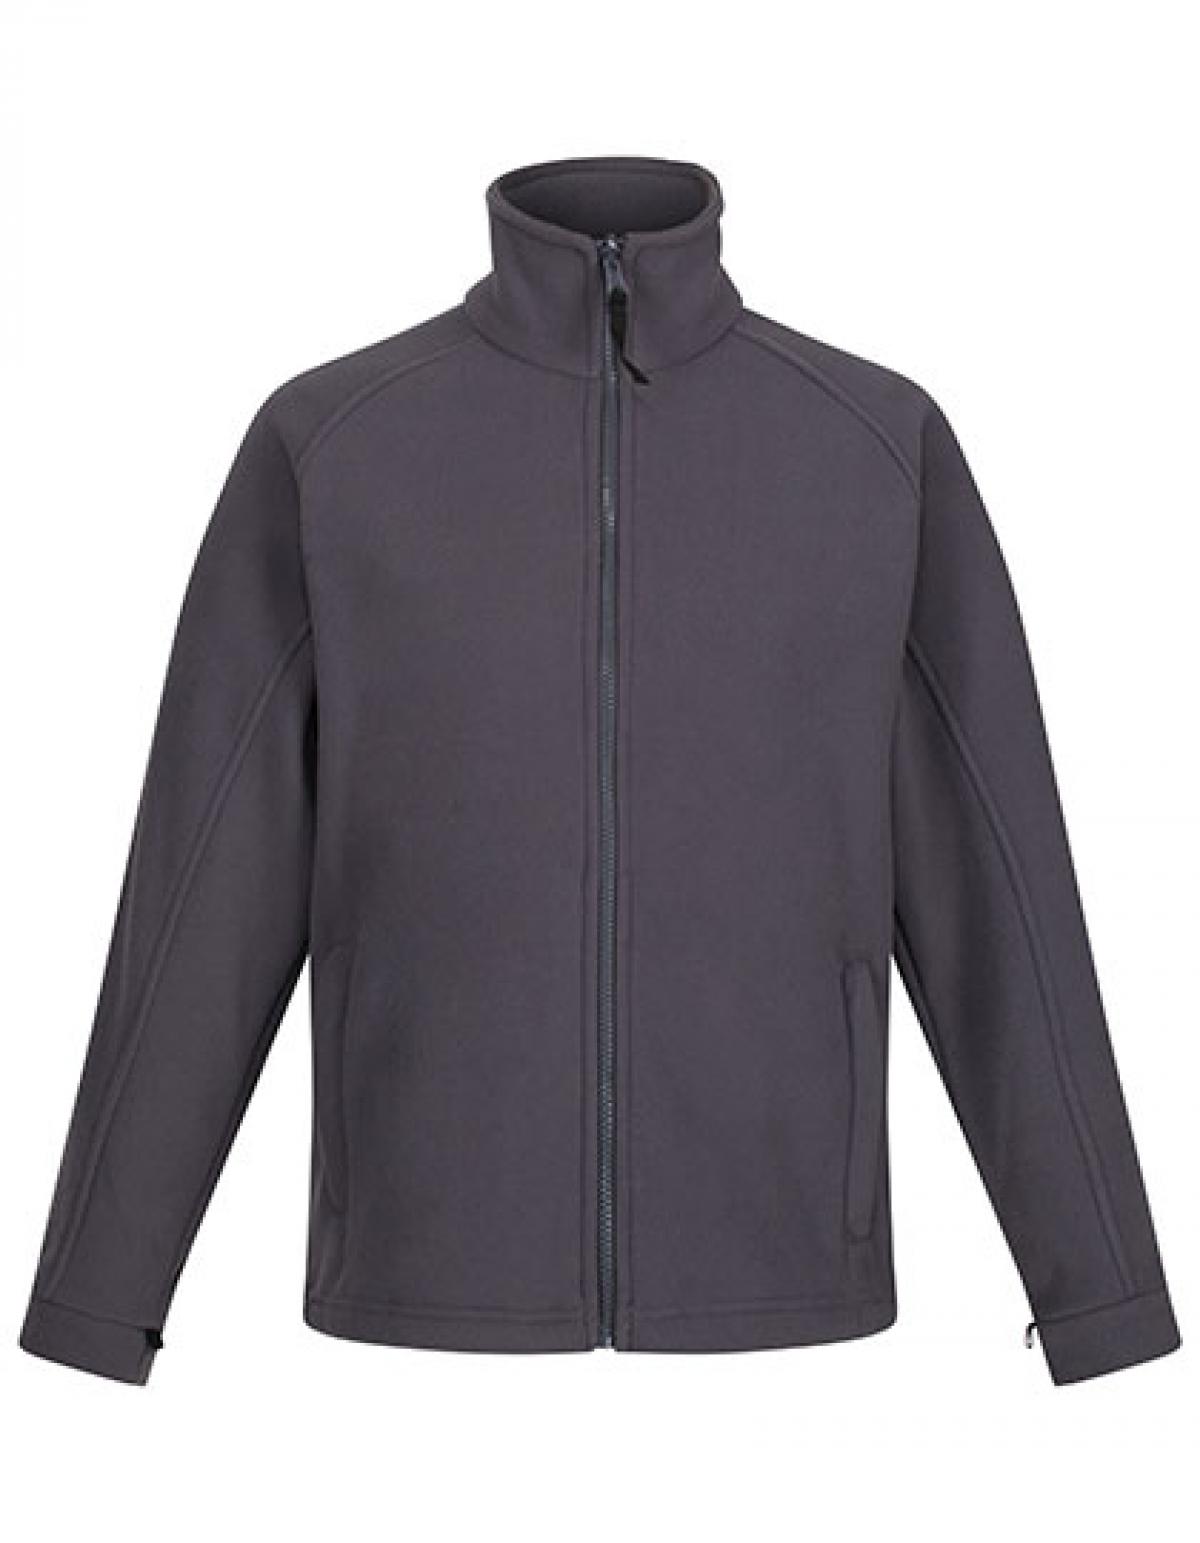 Regatta Professional Damen Thor III Fleece trf541-Damen Winterwear Jacke 